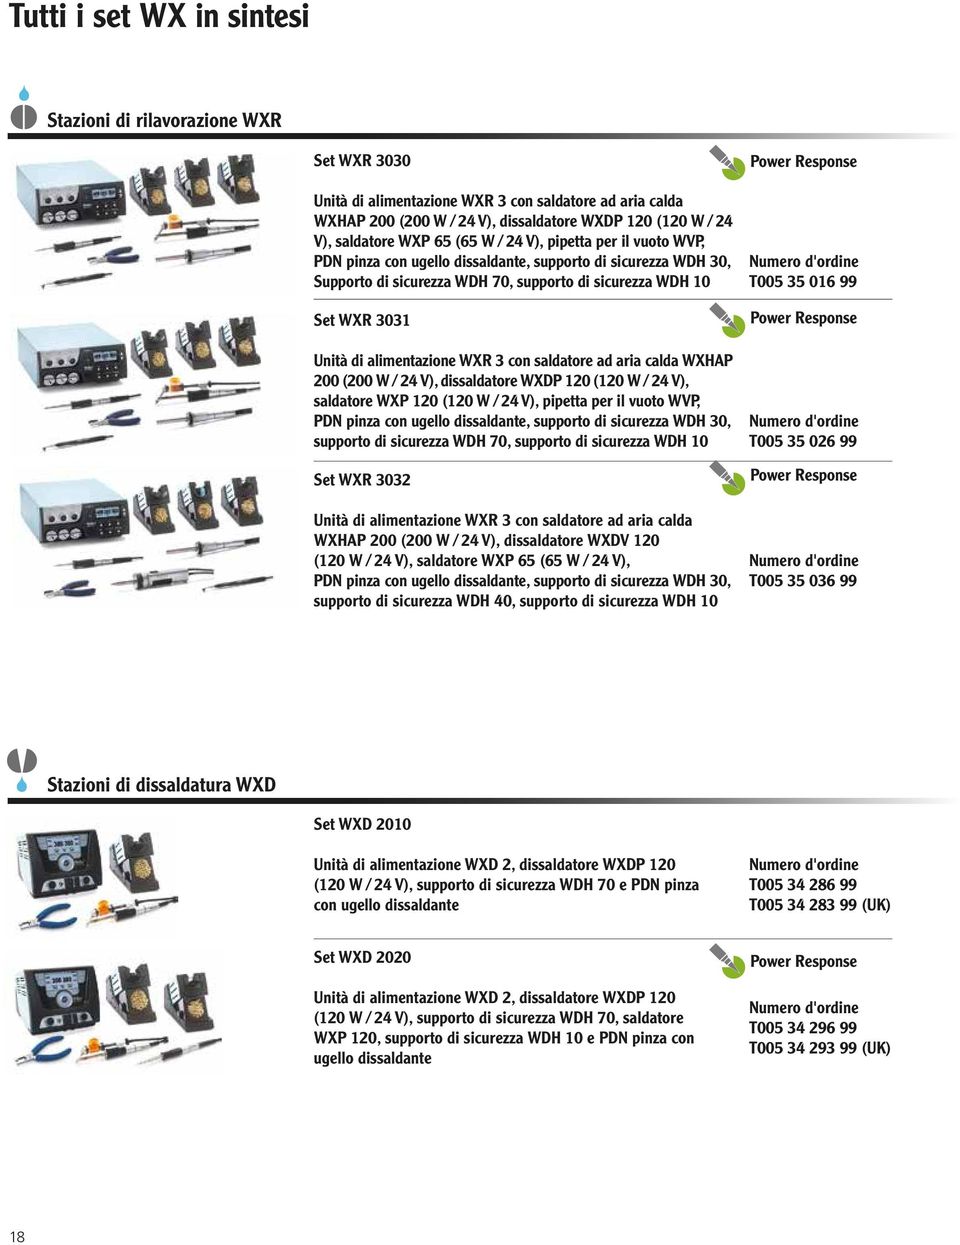 ld WXHAP 200 (200 W / 24 V), dissldtore WXDP 120 (120 W / 24 V), sldtore WXP 120 (120 W / 24 V), pipett per il vuoto WVP, PDN pinz on ugello dissldnte, supporto di siurezz WDH 30, supporto di siurezz